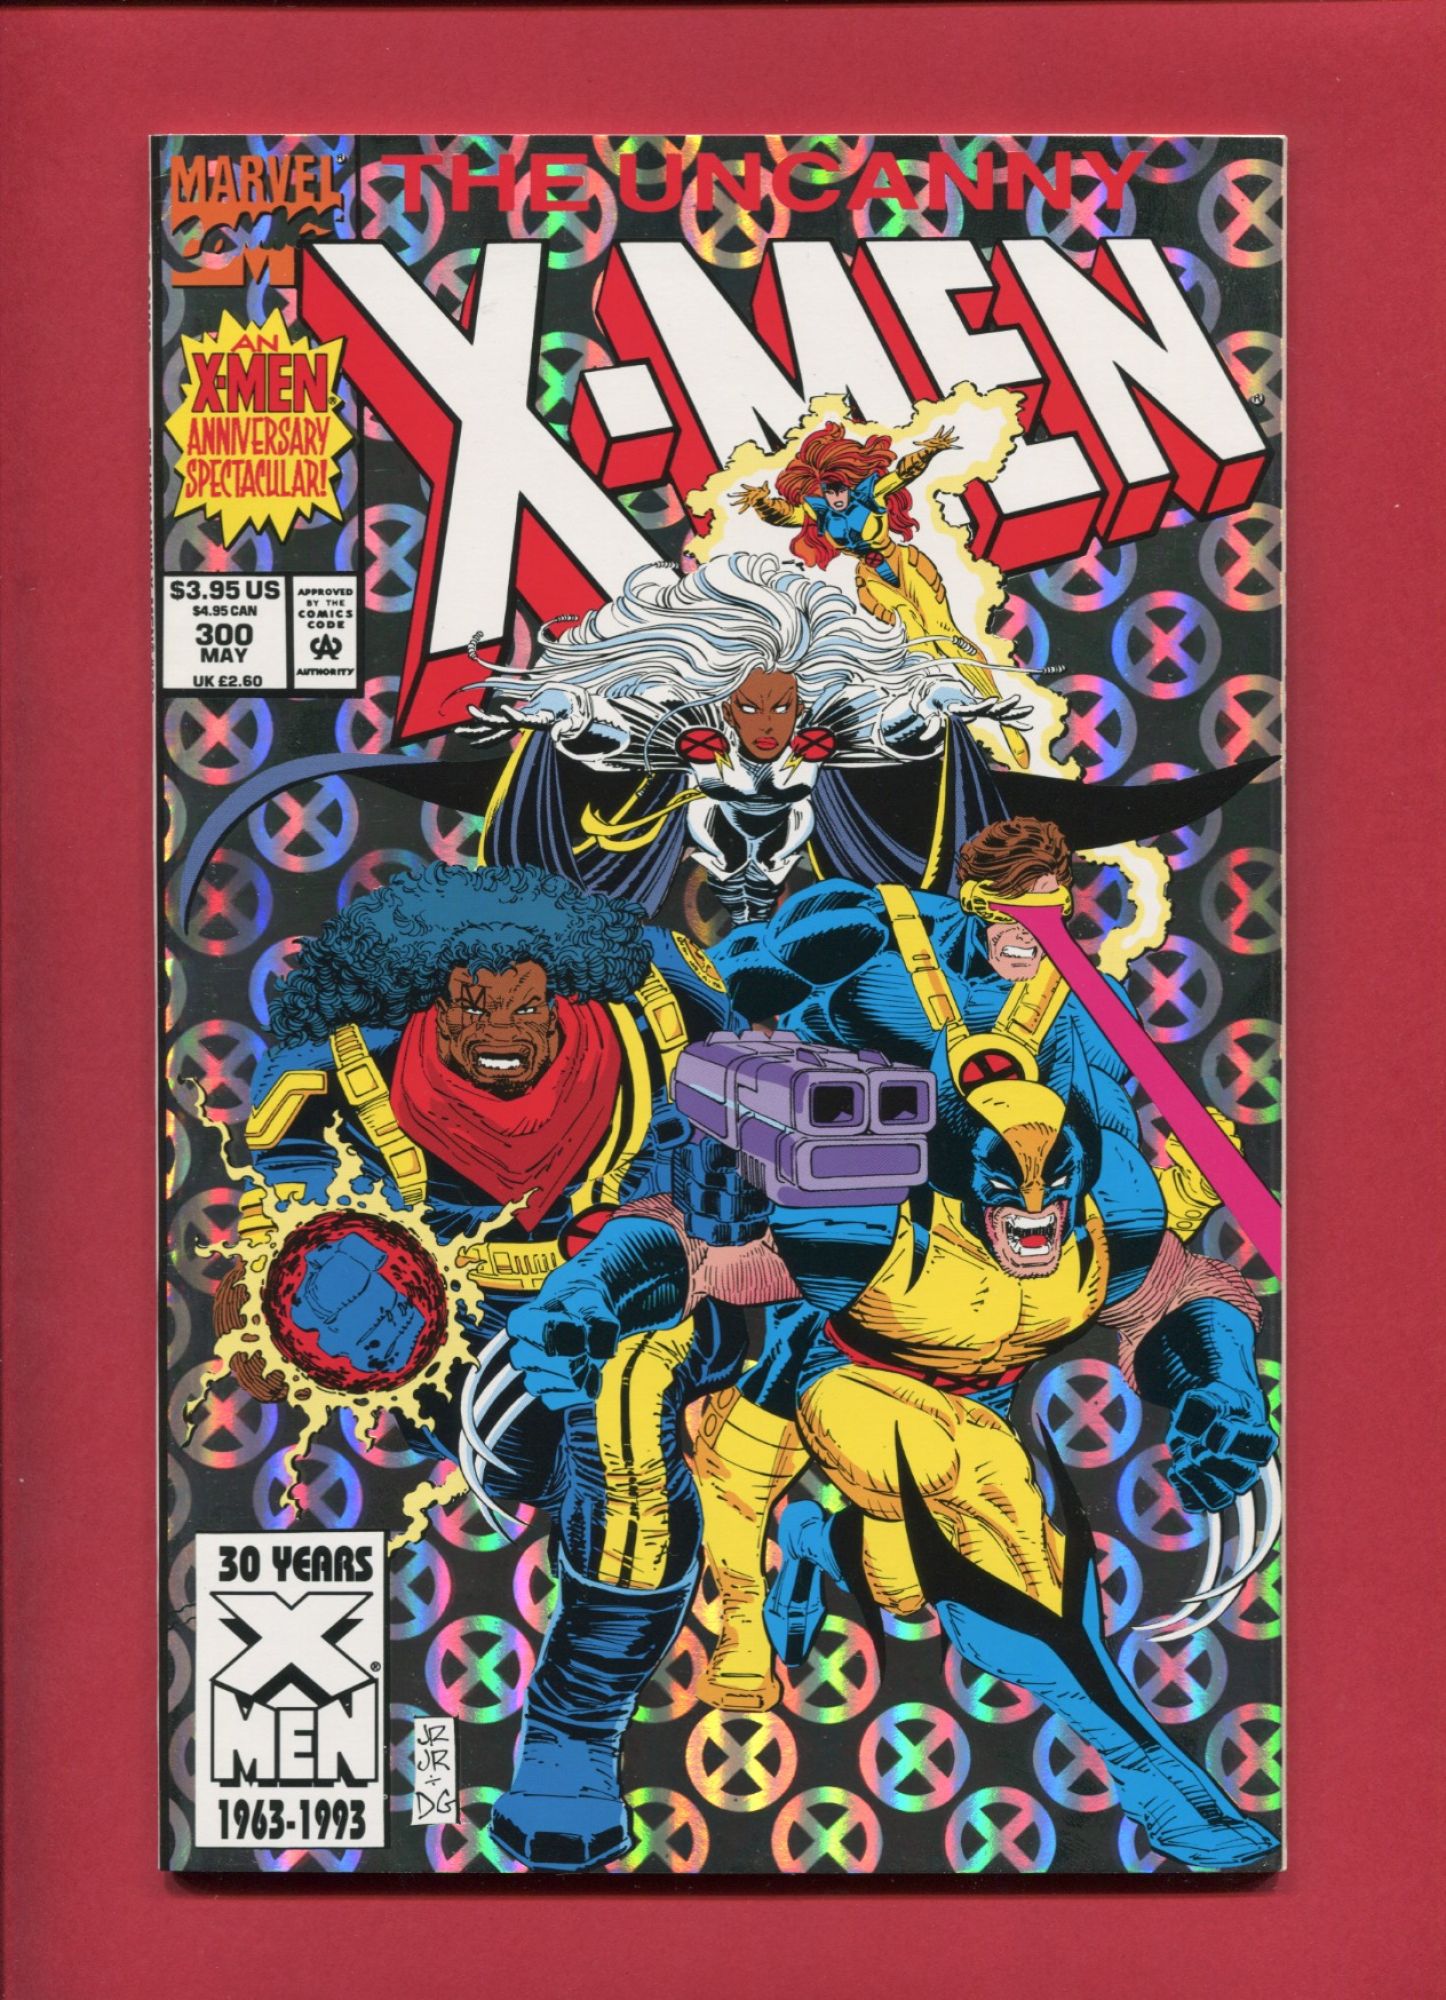 Uncanny X-Men #300, May 1993, 9.2 NM-